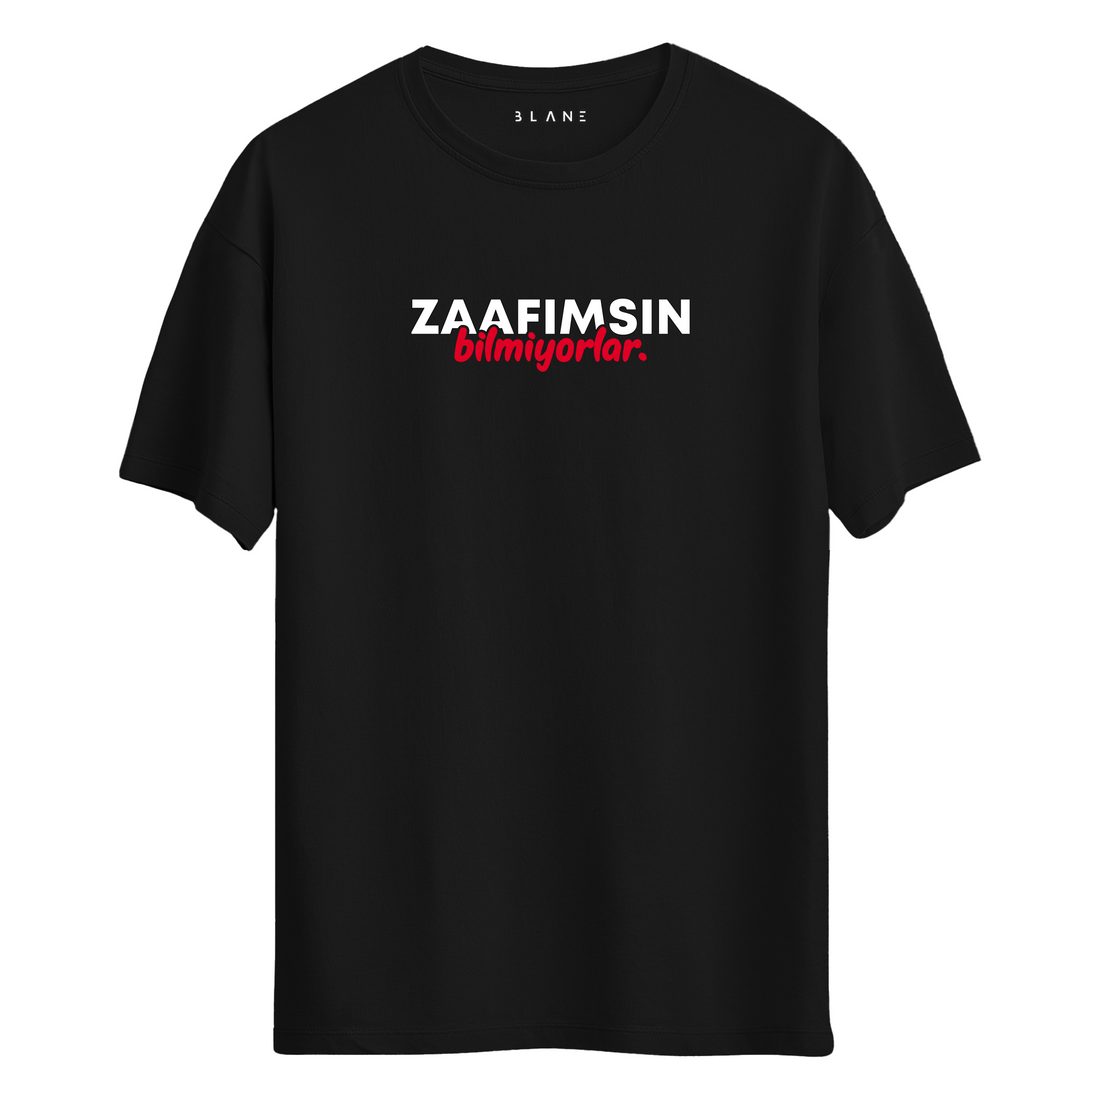 ZAAFIMSIN BİLMİYORLAR - T-Shirt